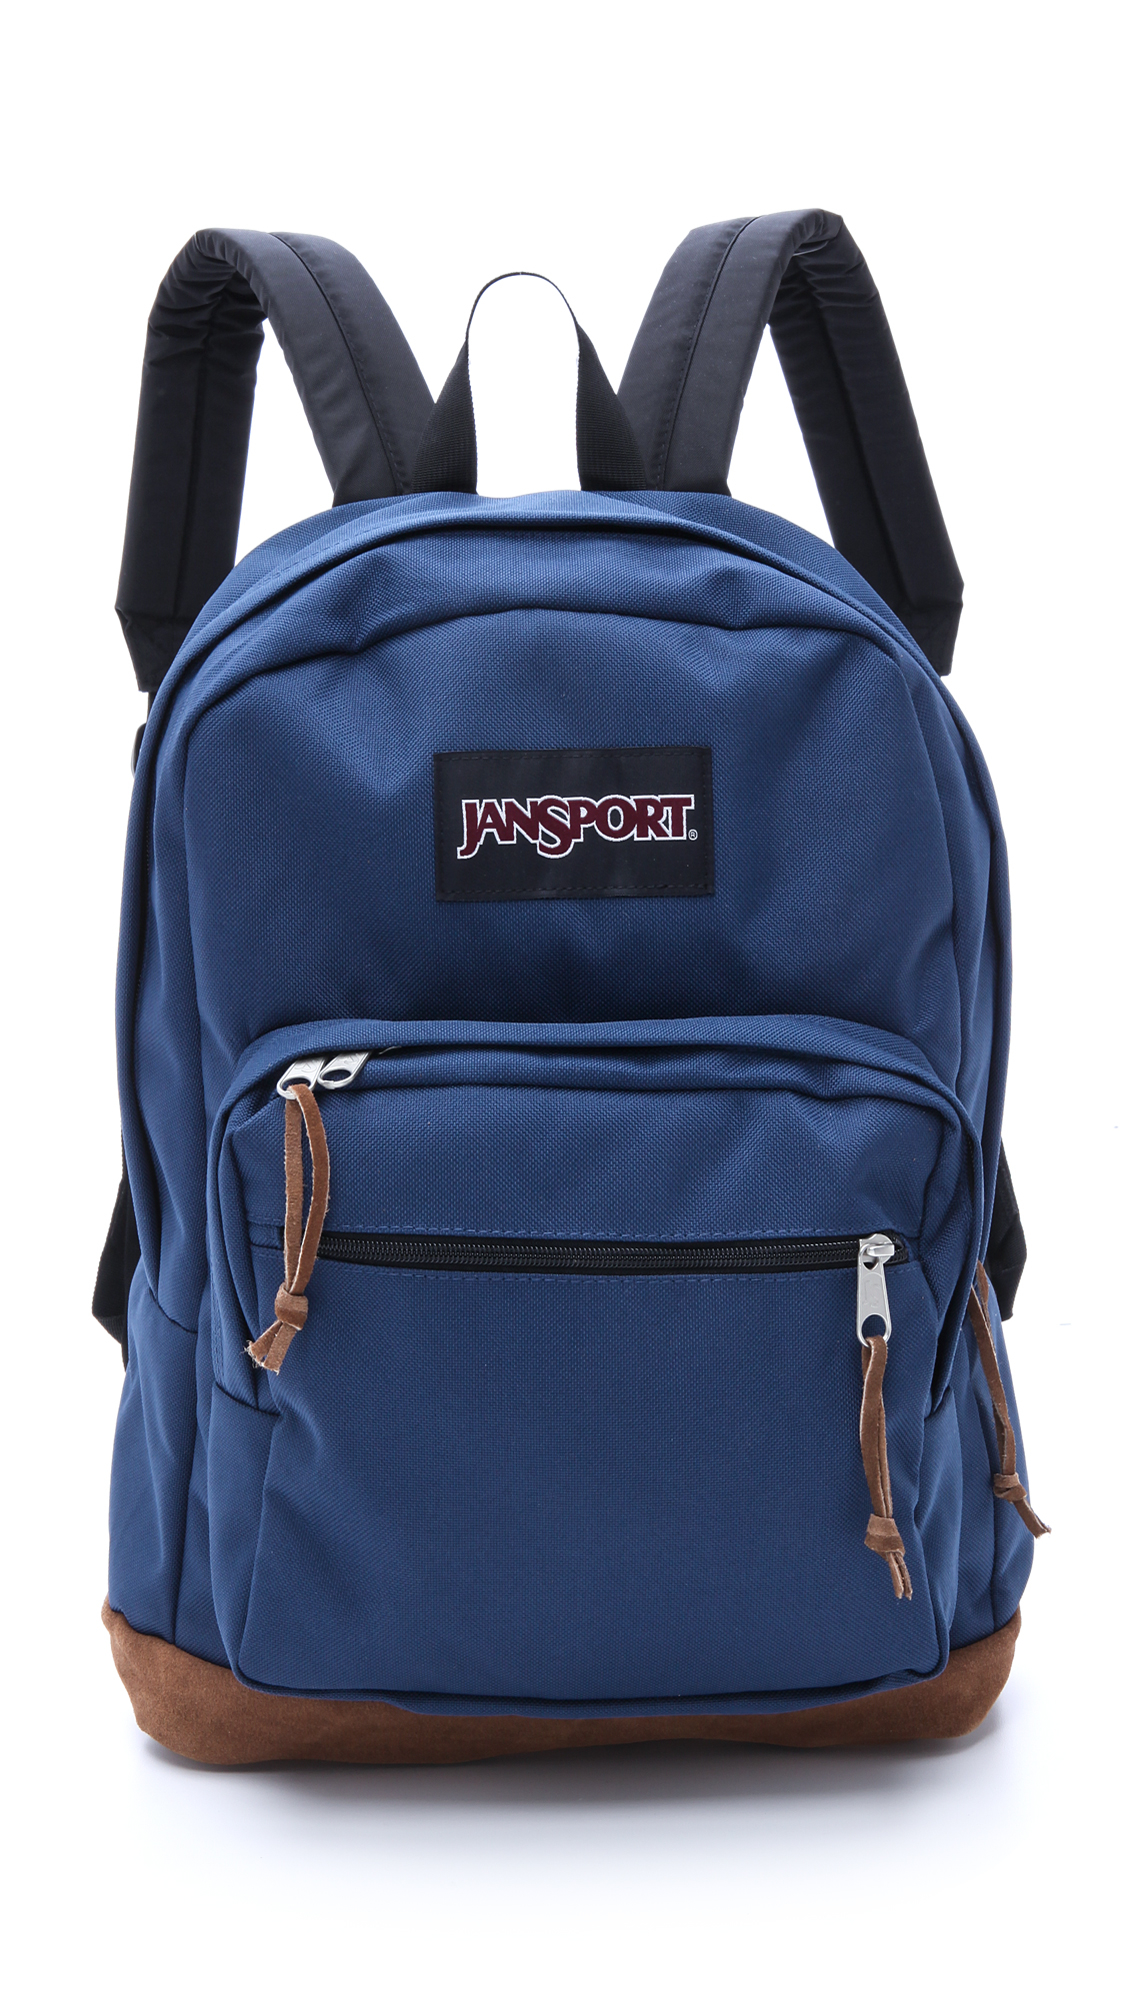 Jansport Right Pack Backpack in Navy (Blue) for Men - Lyst